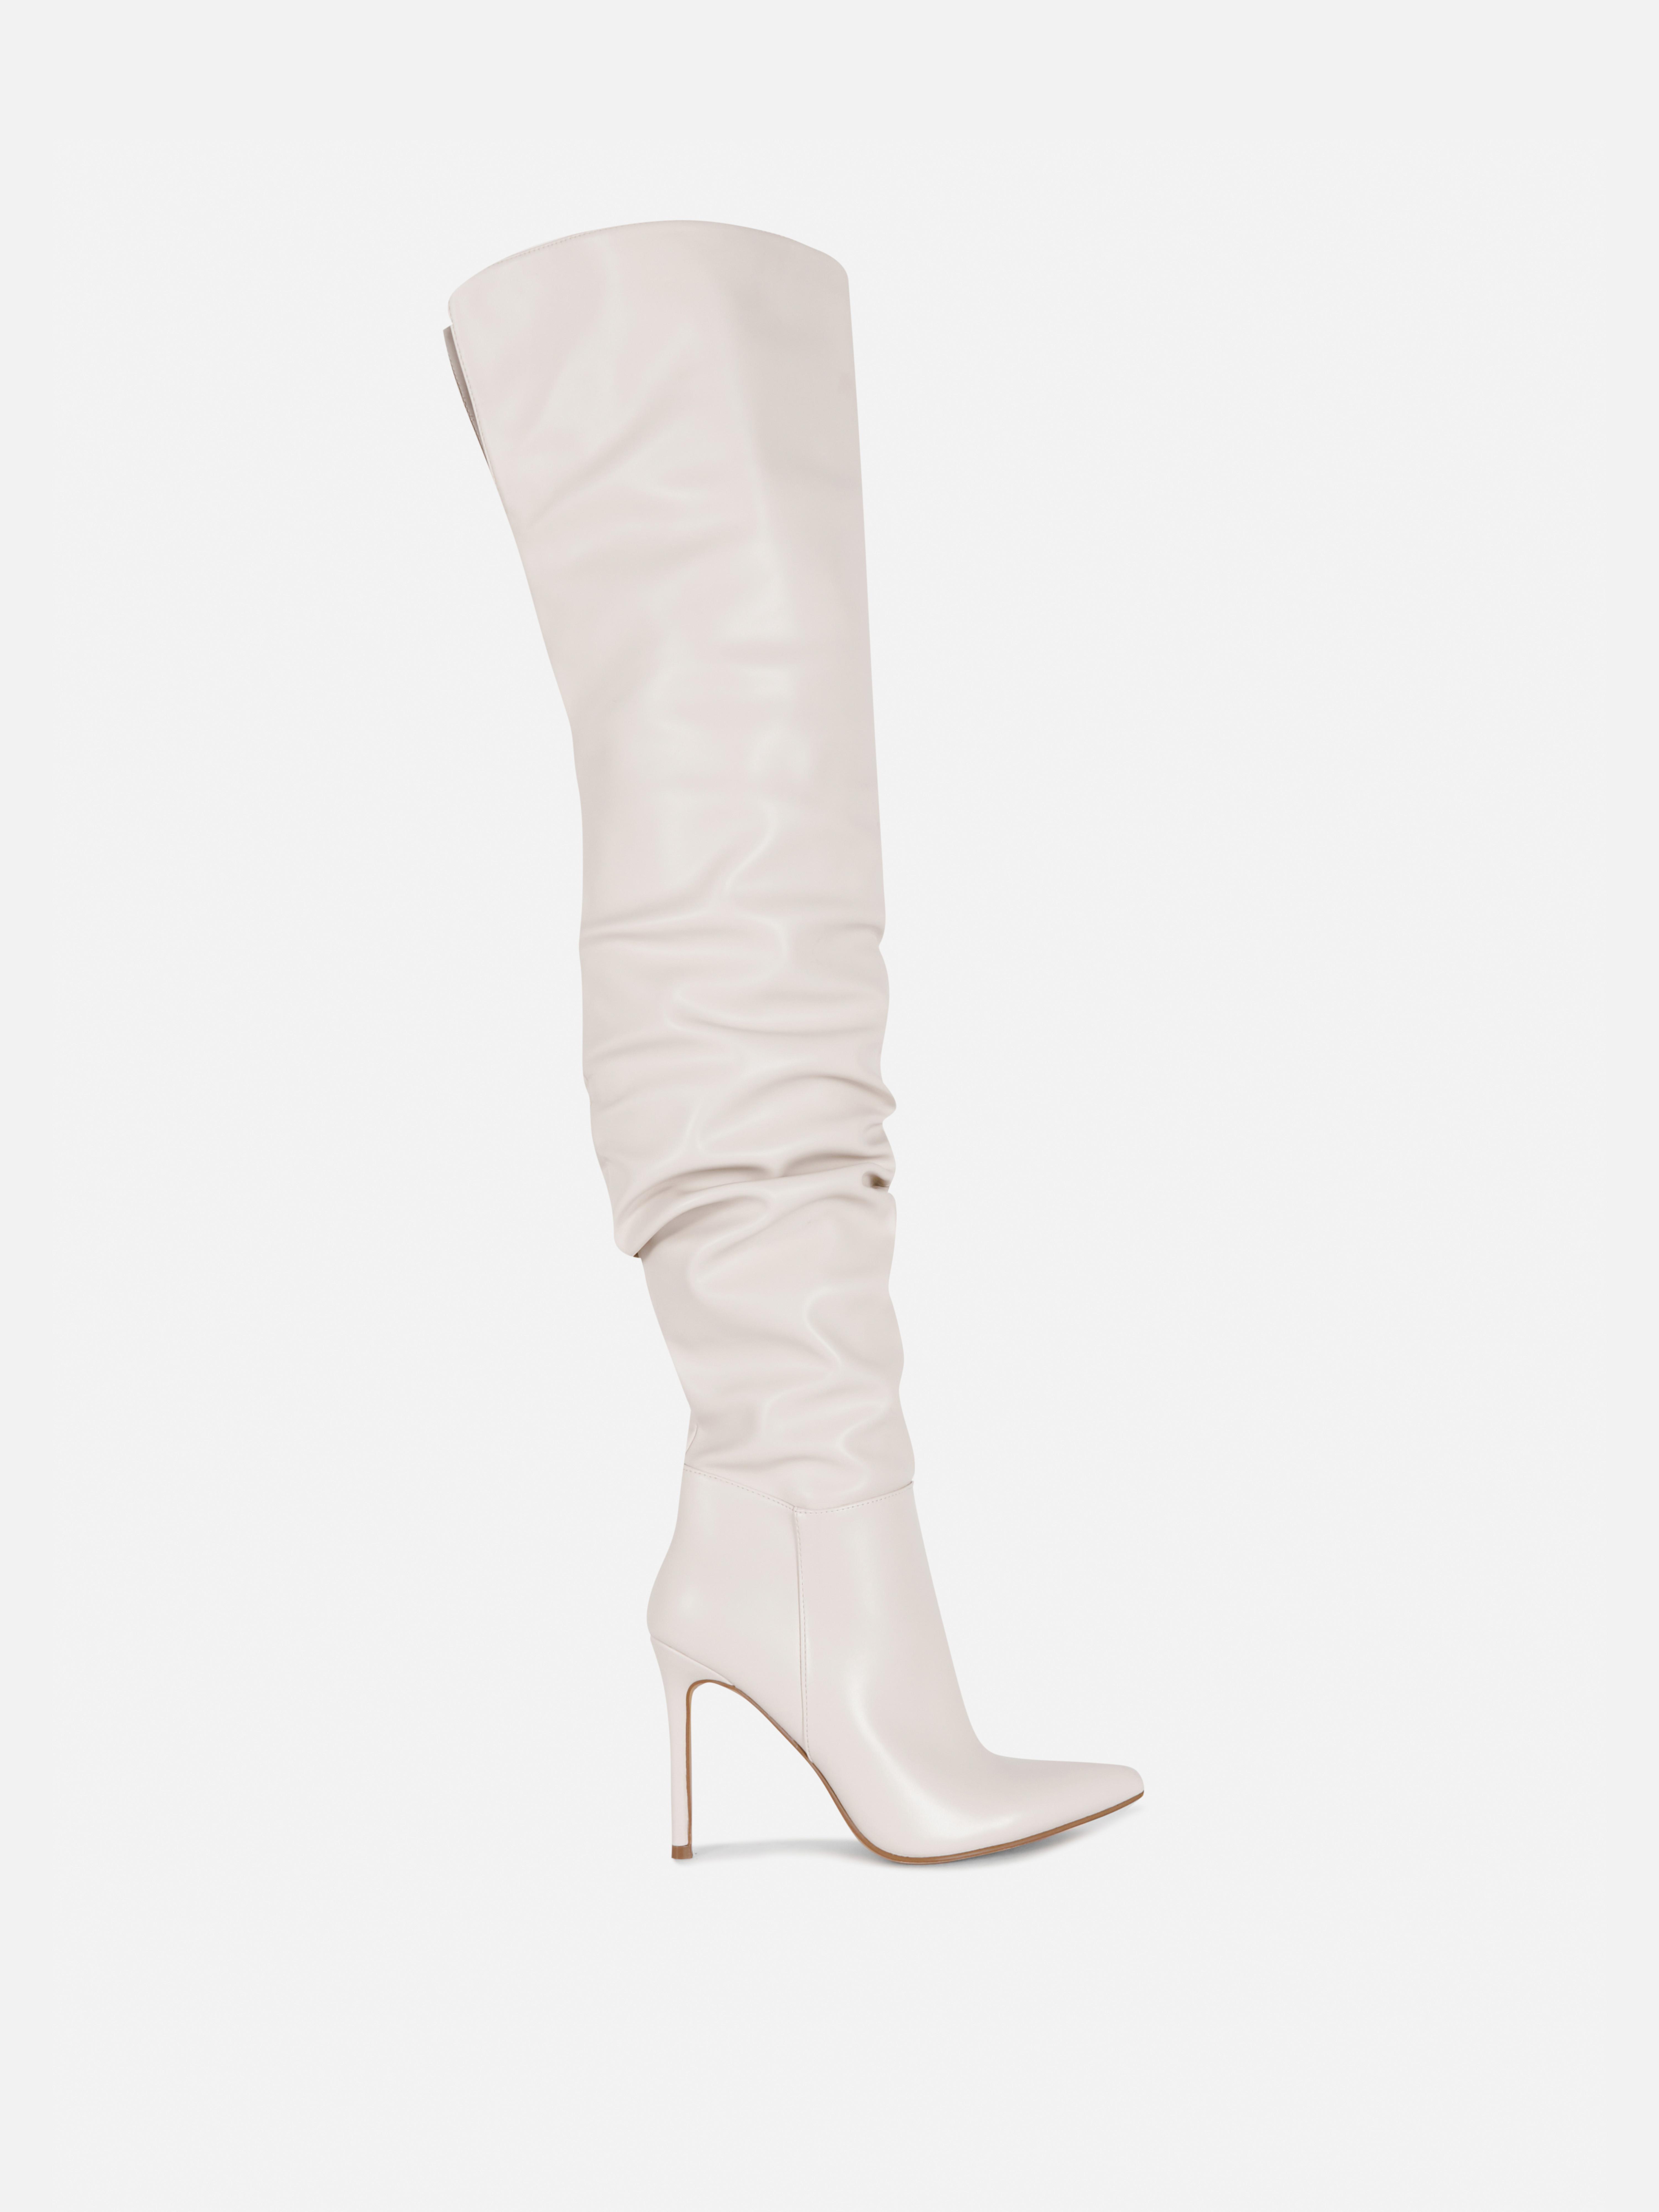 Rita Ora Thigh-High Ruched Stiletto Boots